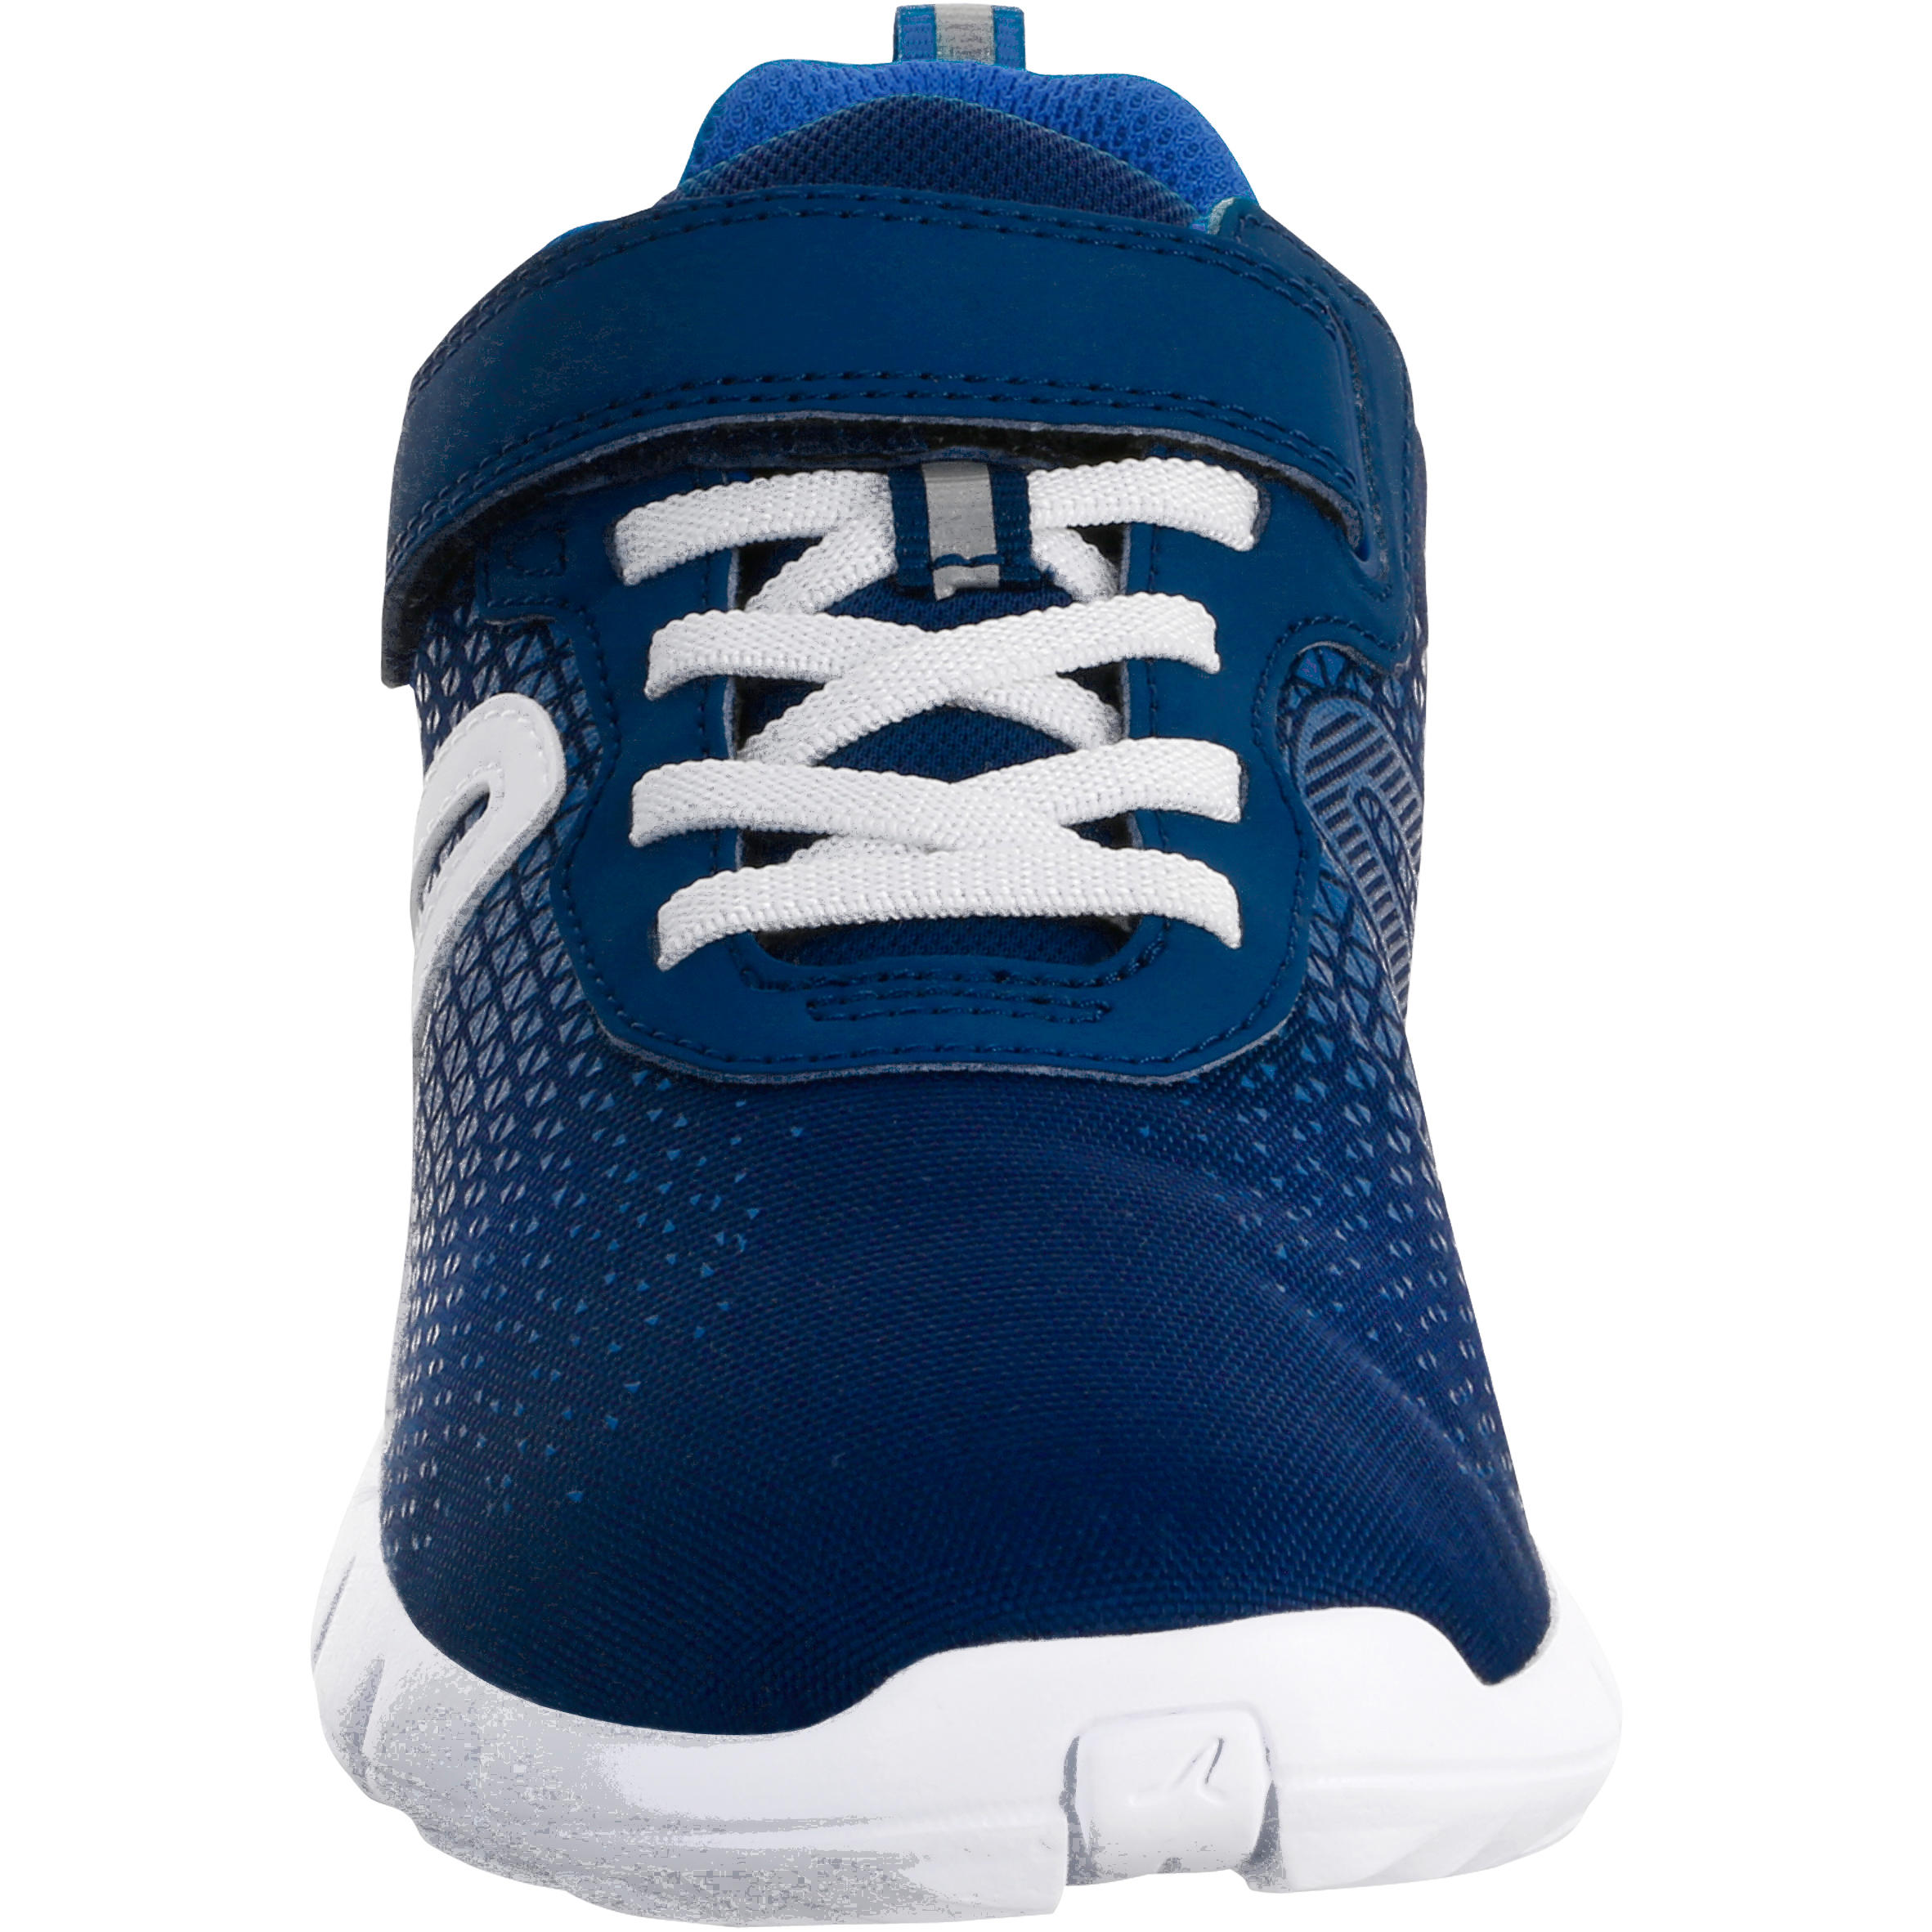 Kids’ Sports Shoes - Soft 140 Blue - DECATHLON